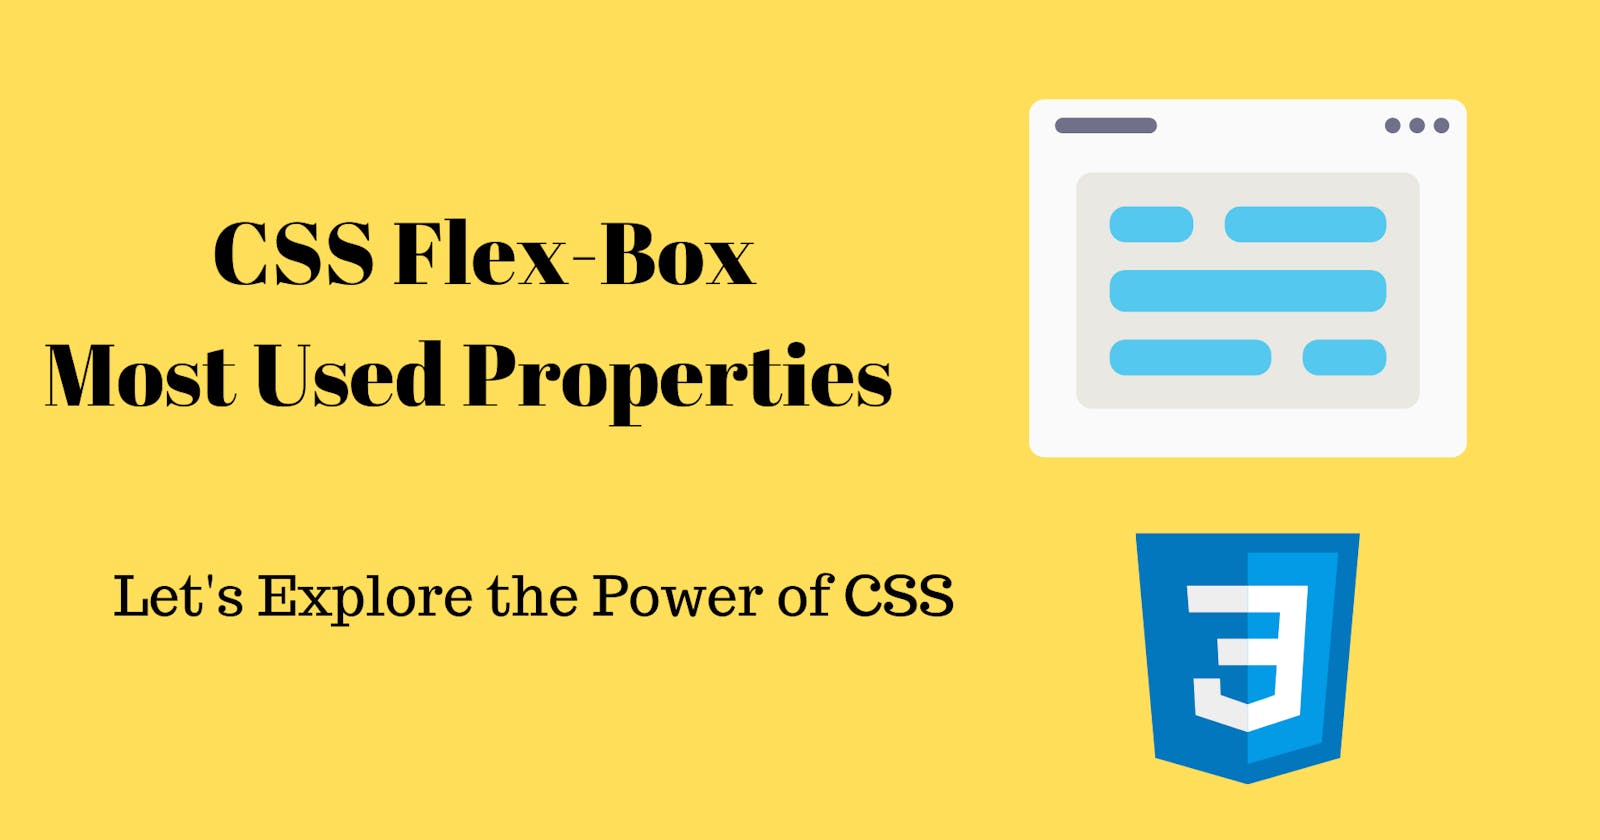 CSS Flex-Box Most Used Properties